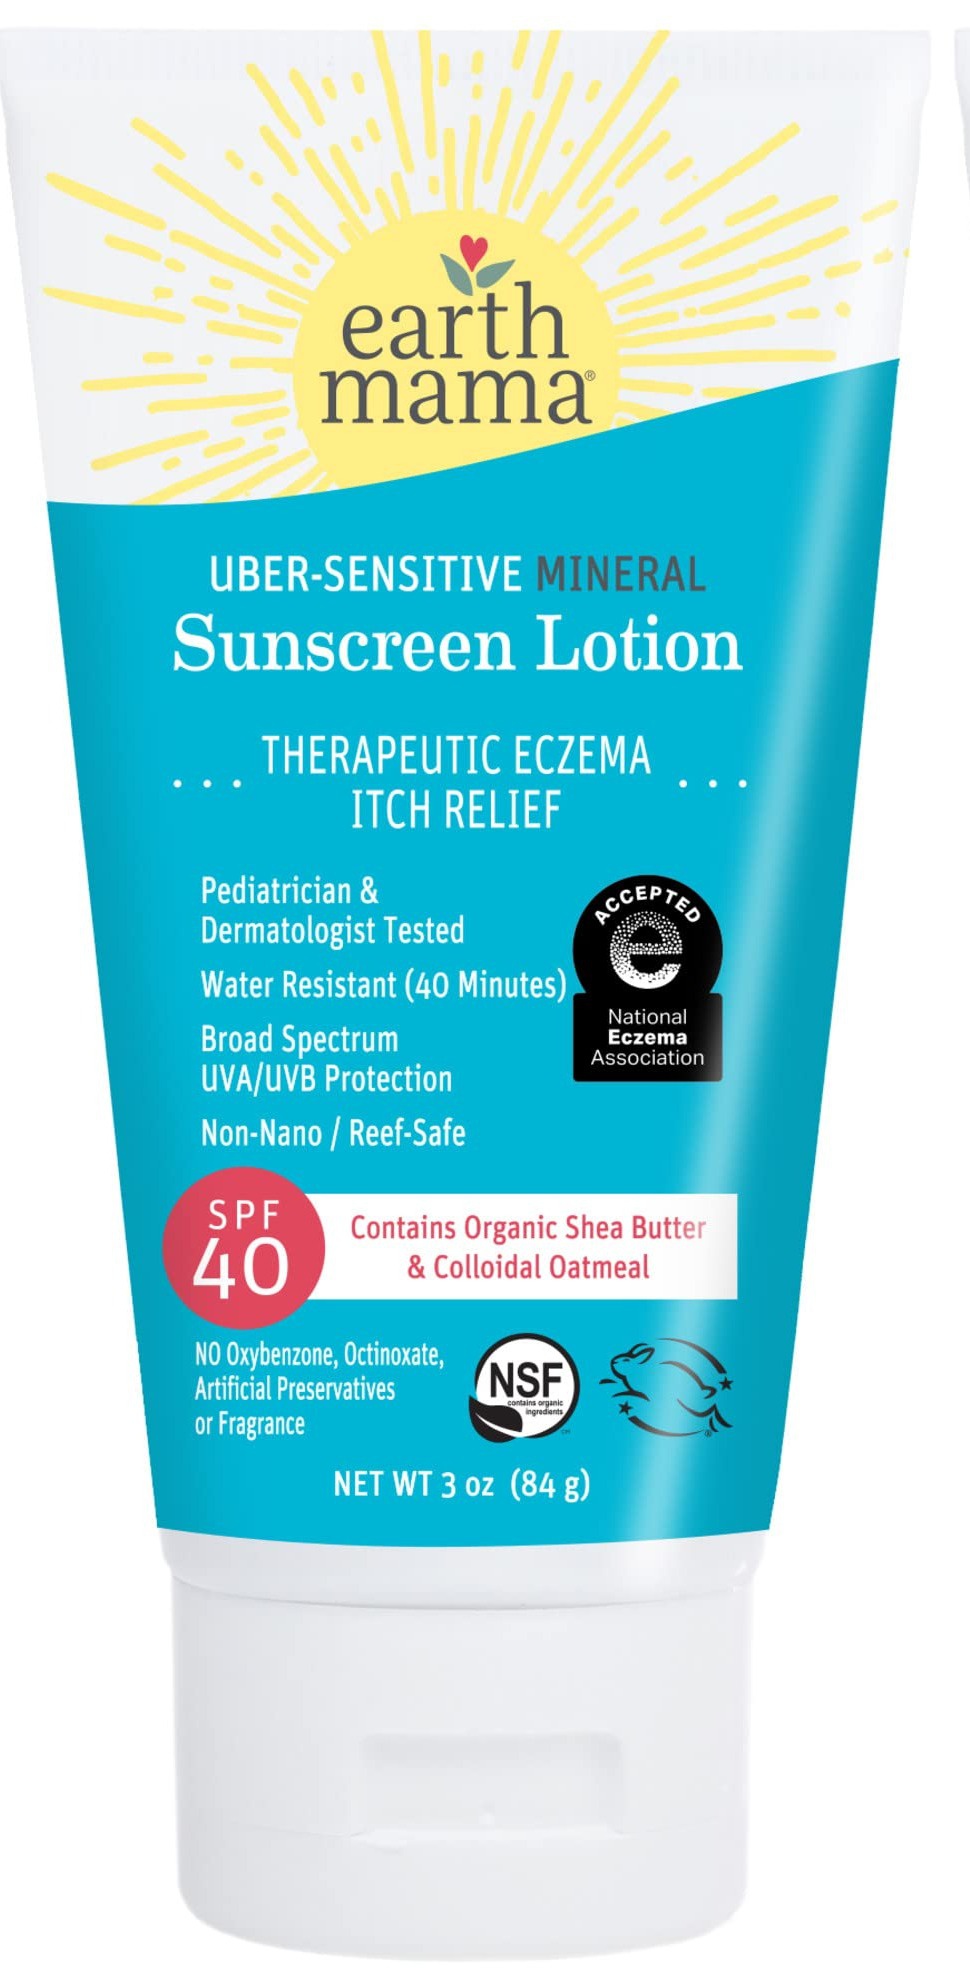 Earth Mama Uber-sensitive Mineral Sunscreen Lotion